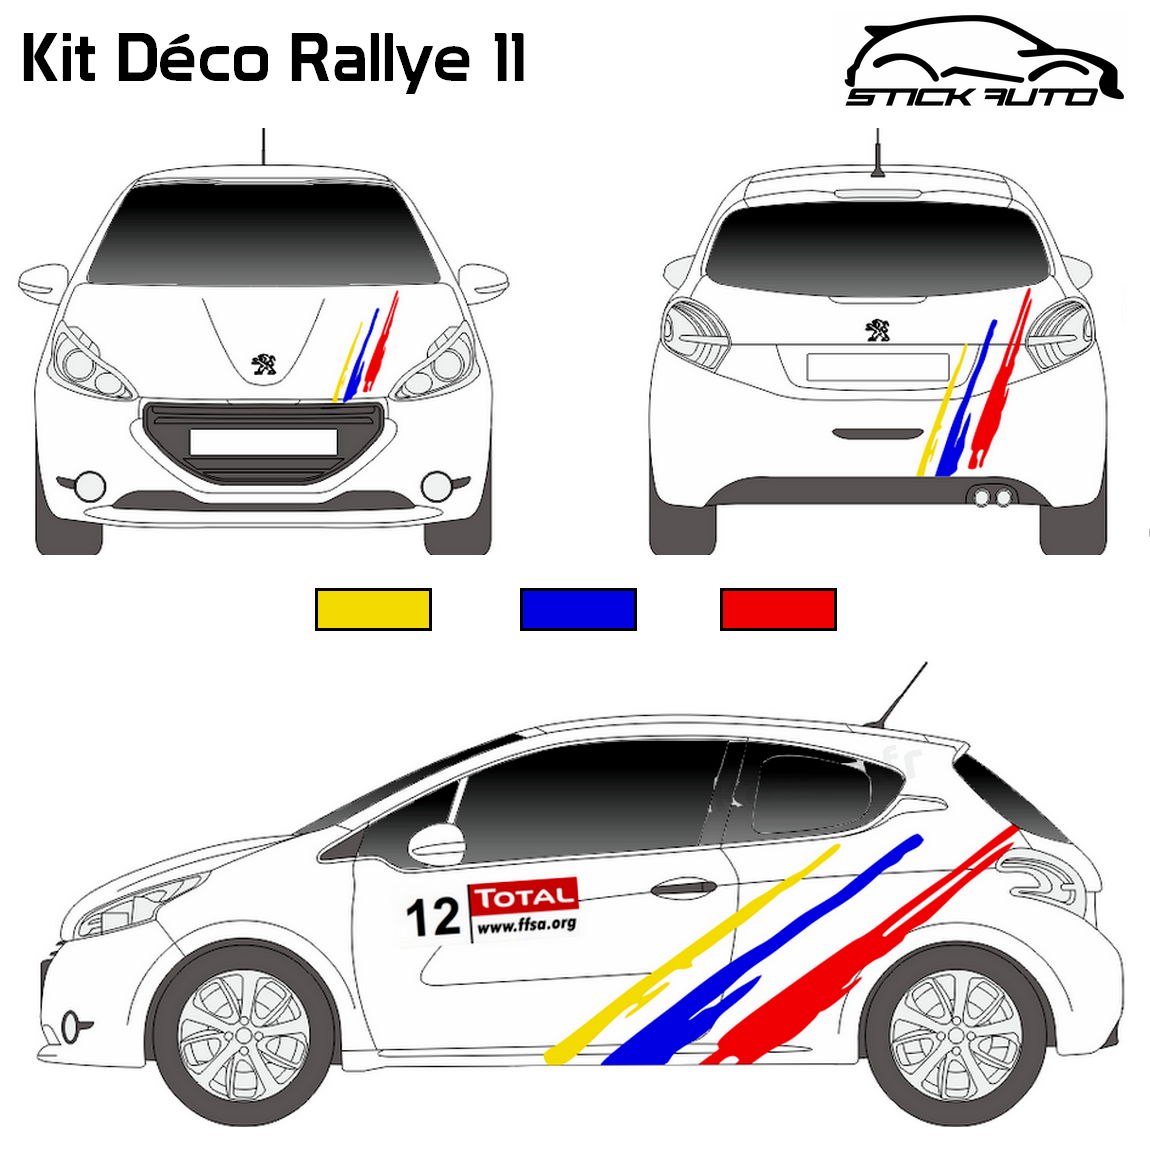 Kit Déco Rallye 11 - STICK AUTO